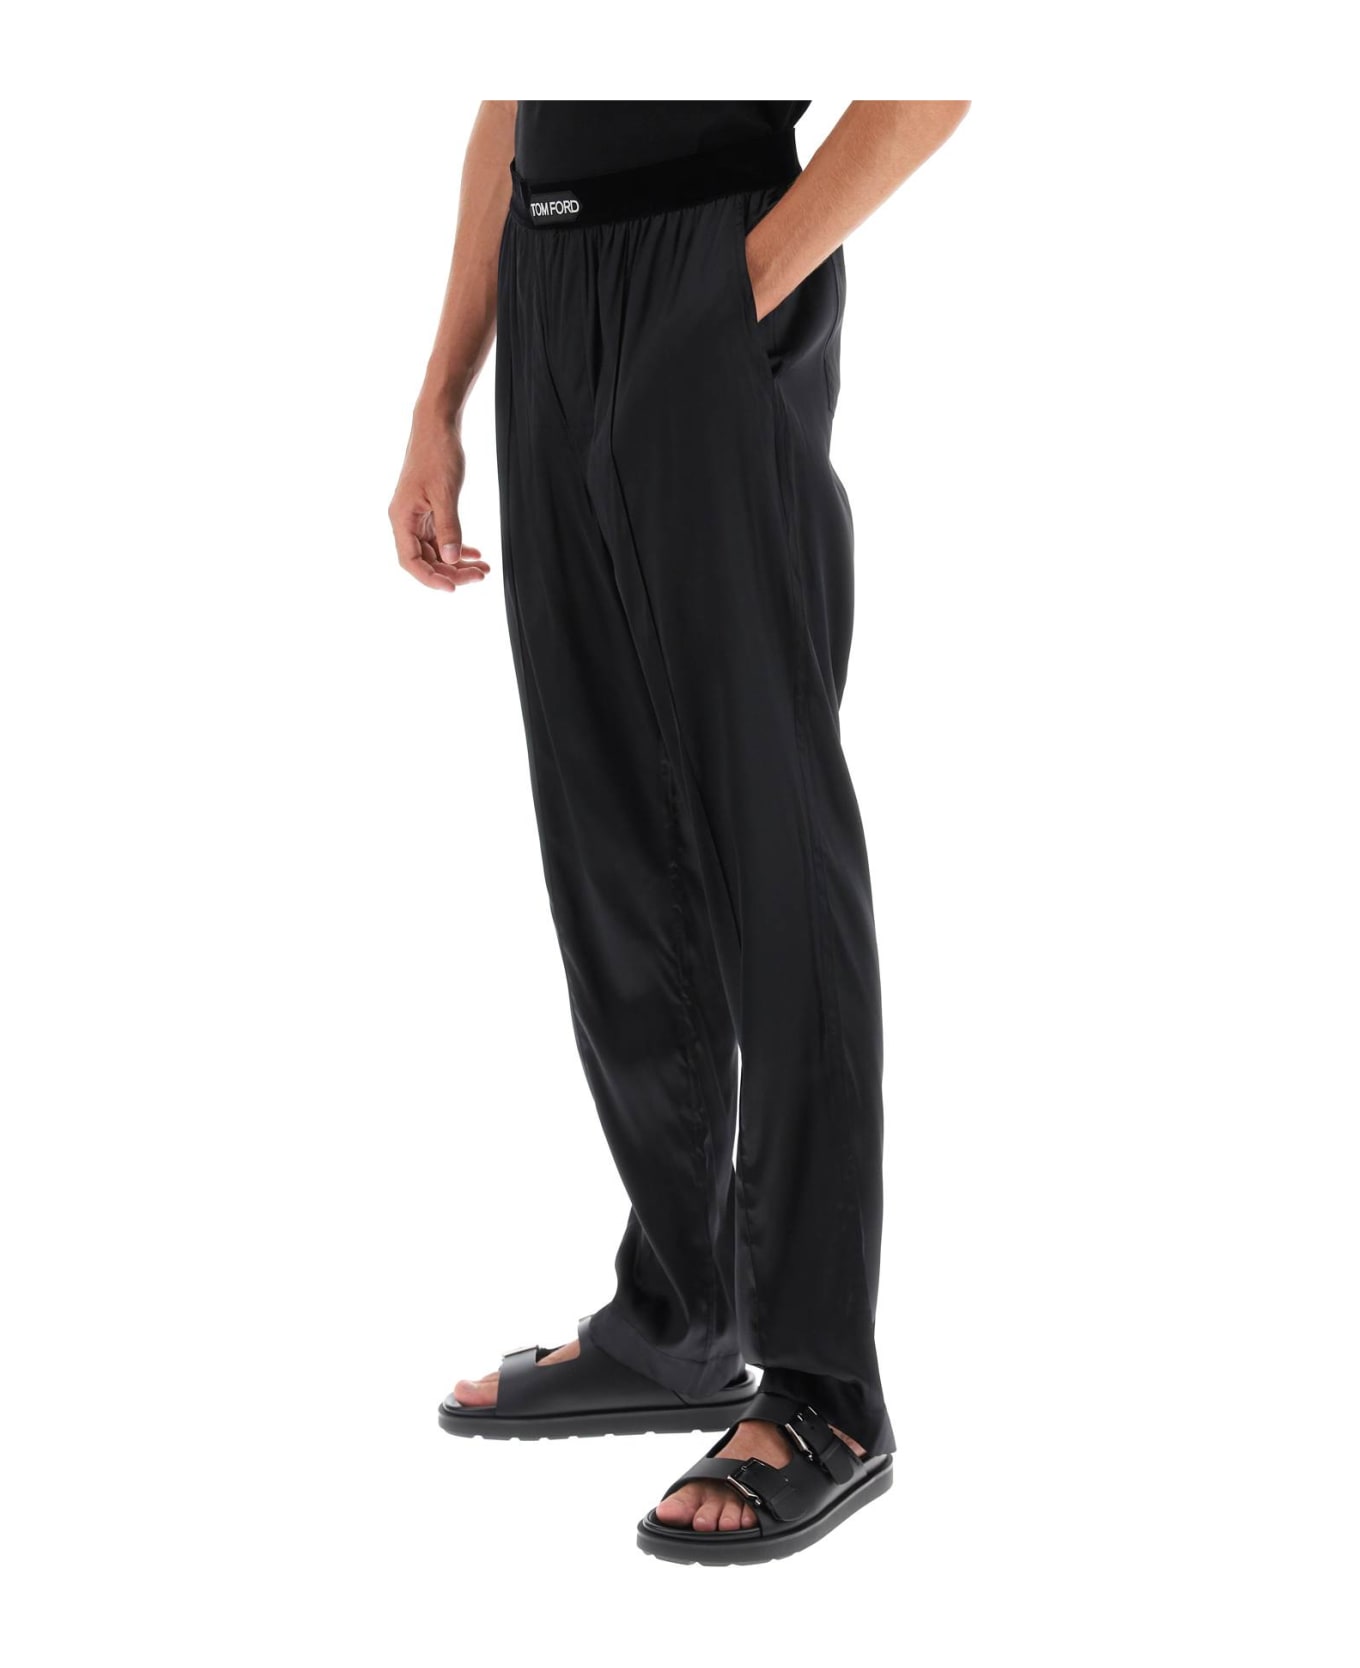 Tom Ford Logo Waist Satin Pajama Trousers - NERO (Black) ボトムス